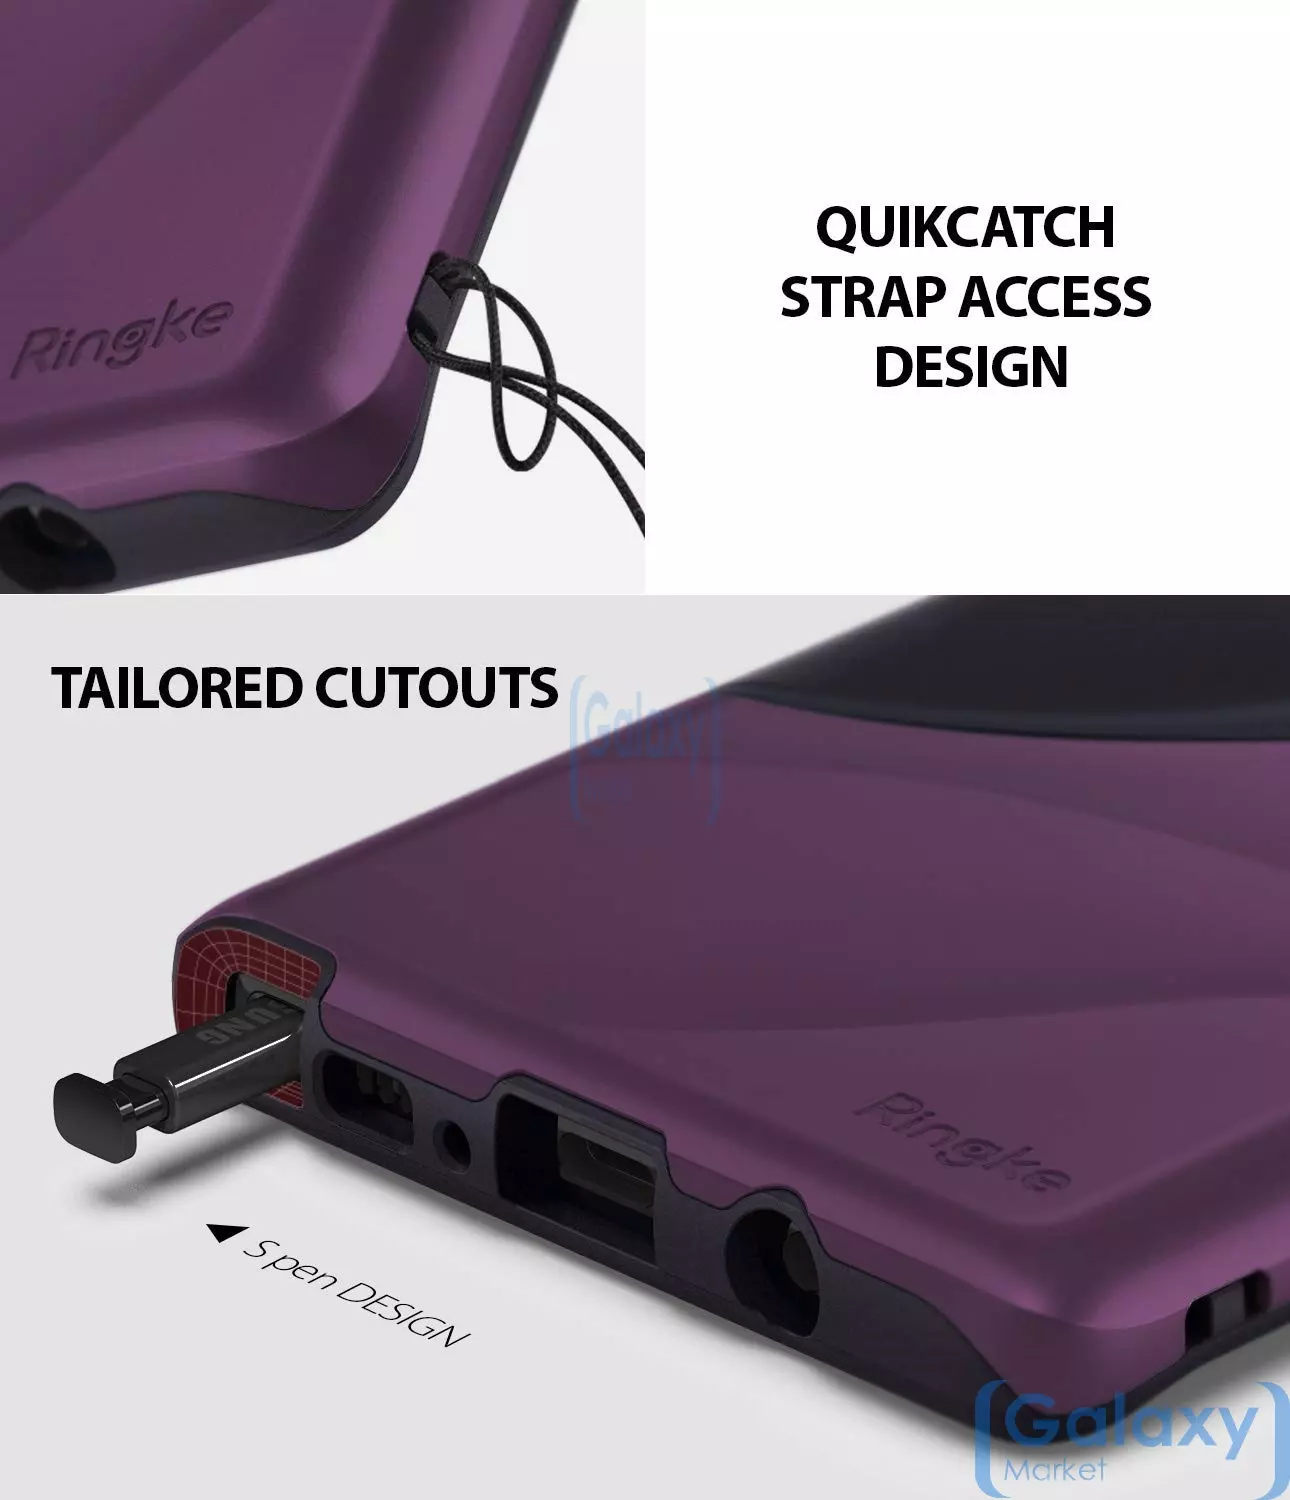 Чехол бампер Ringke Wave Case для Samsung Galaxy Note 9 Metallic Purple (Металлический фиолетовый)